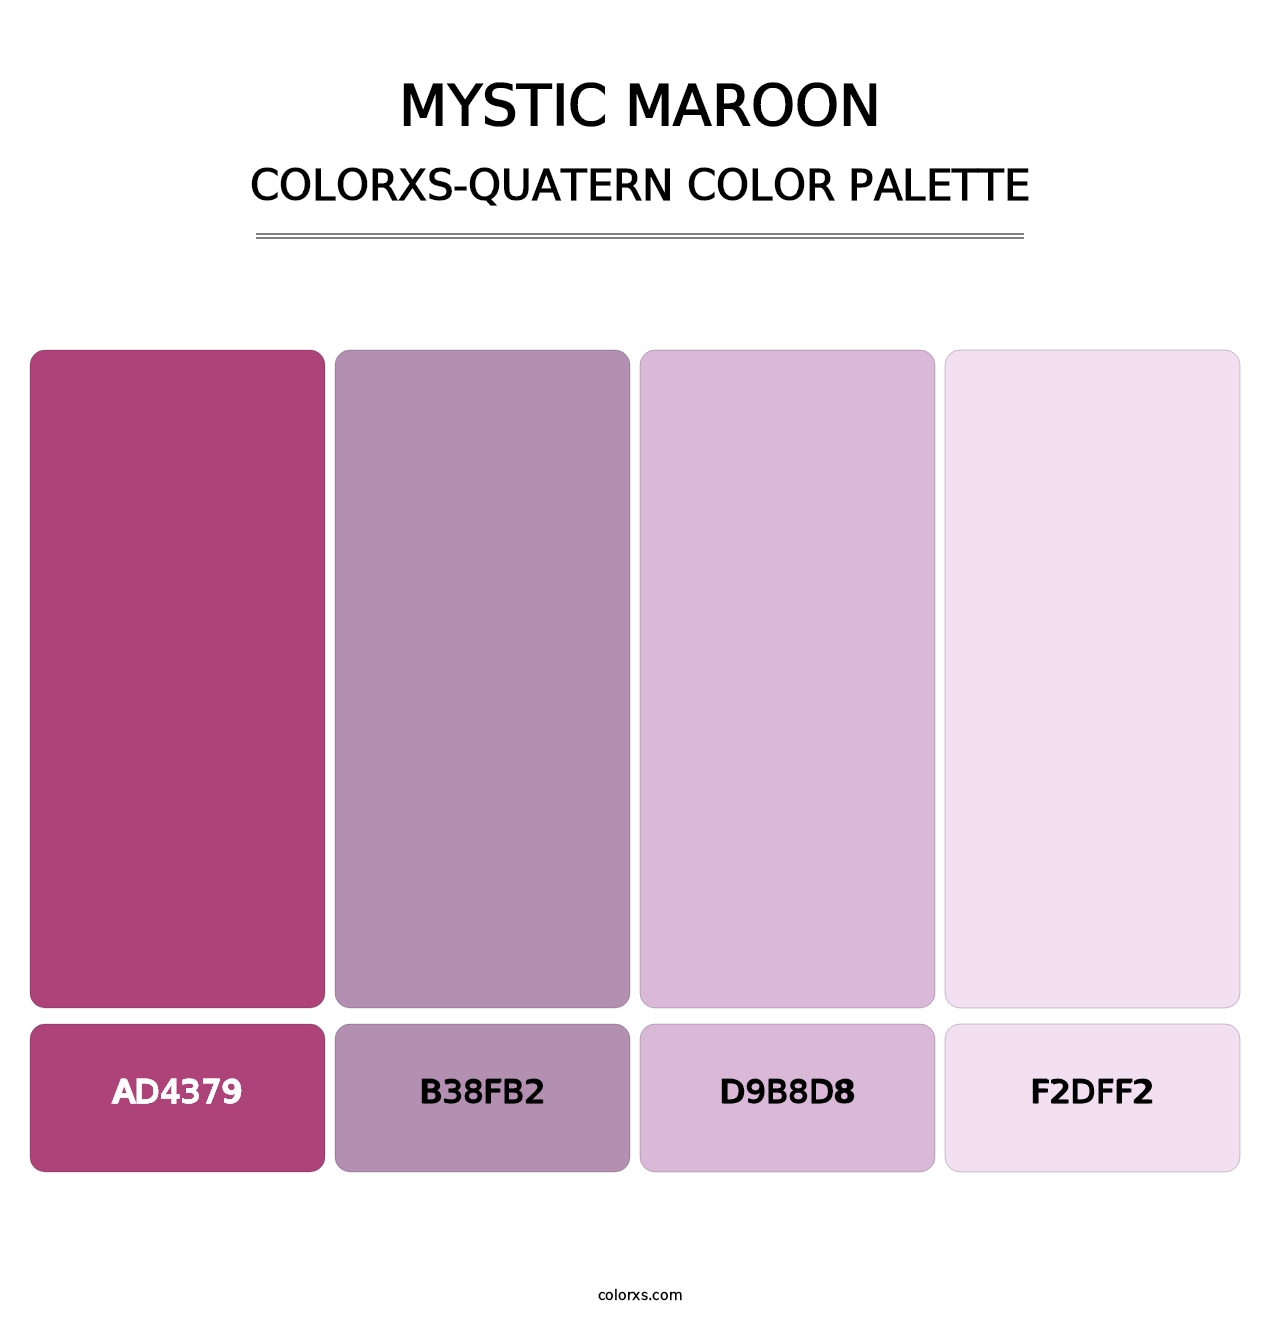 Mystic Maroon - Colorxs Quatern Palette